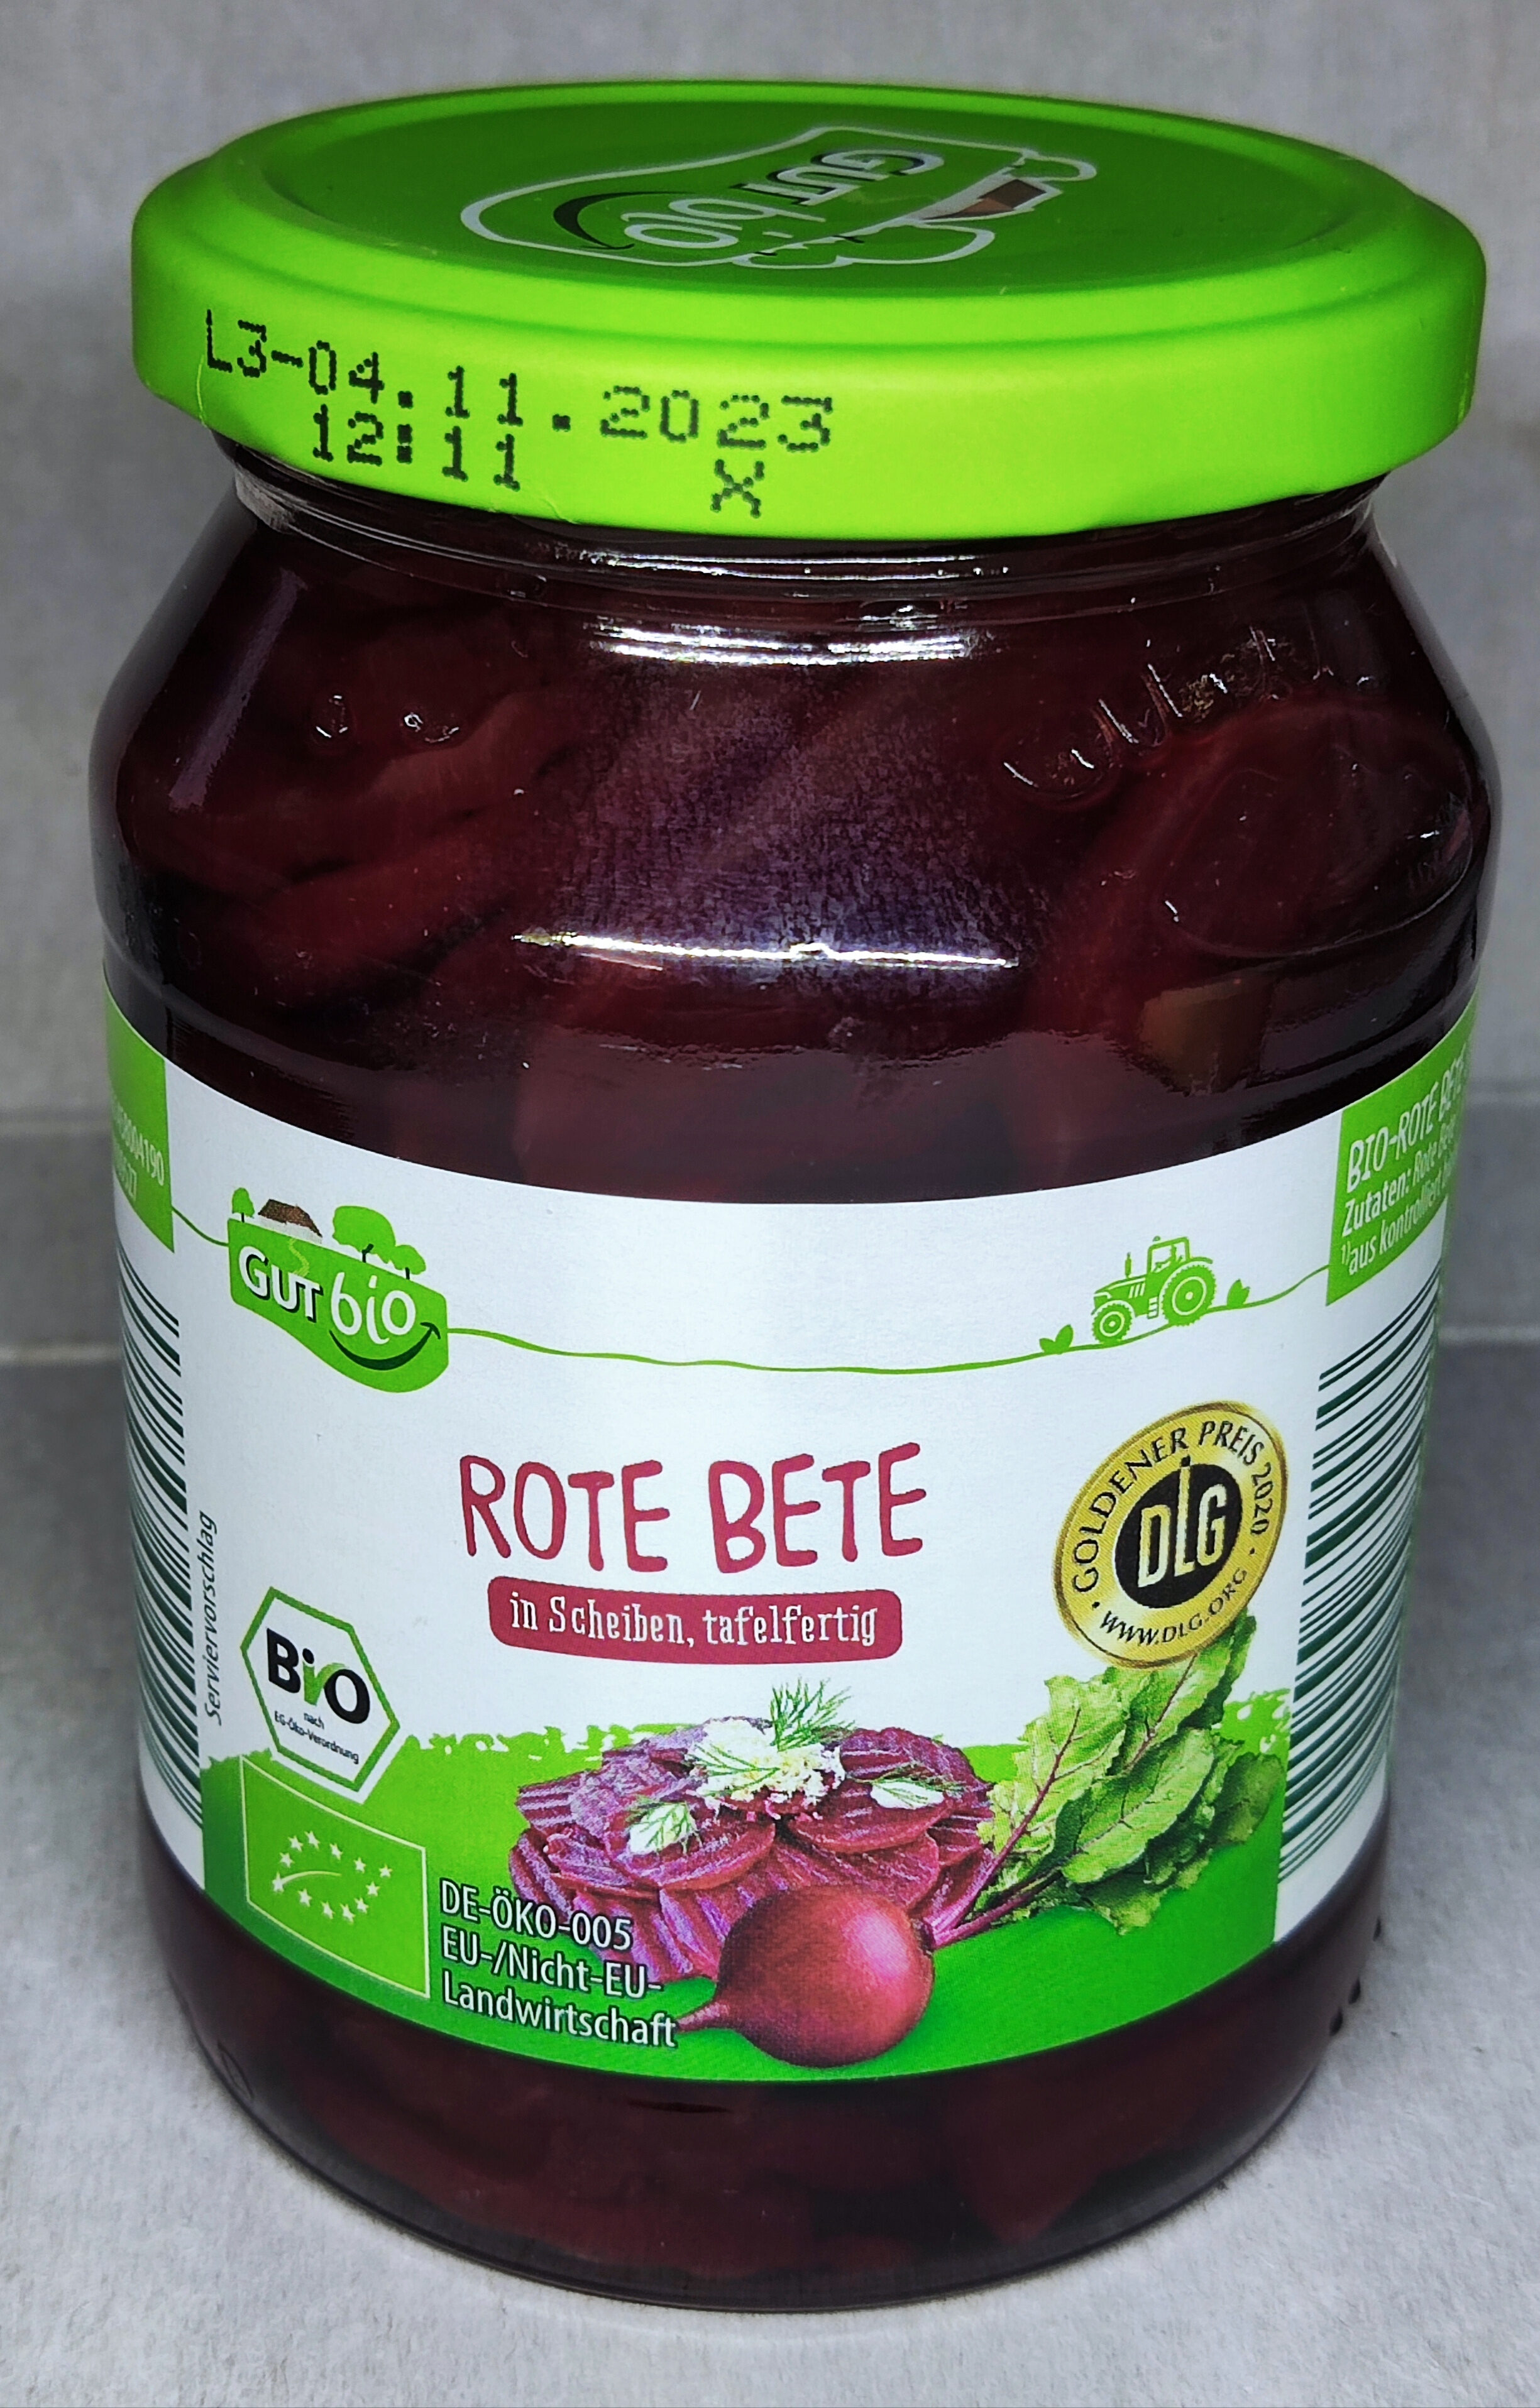 Gemüse Rote Bete (Bio-)  in Scheiben, tafelfertig - Produit - de